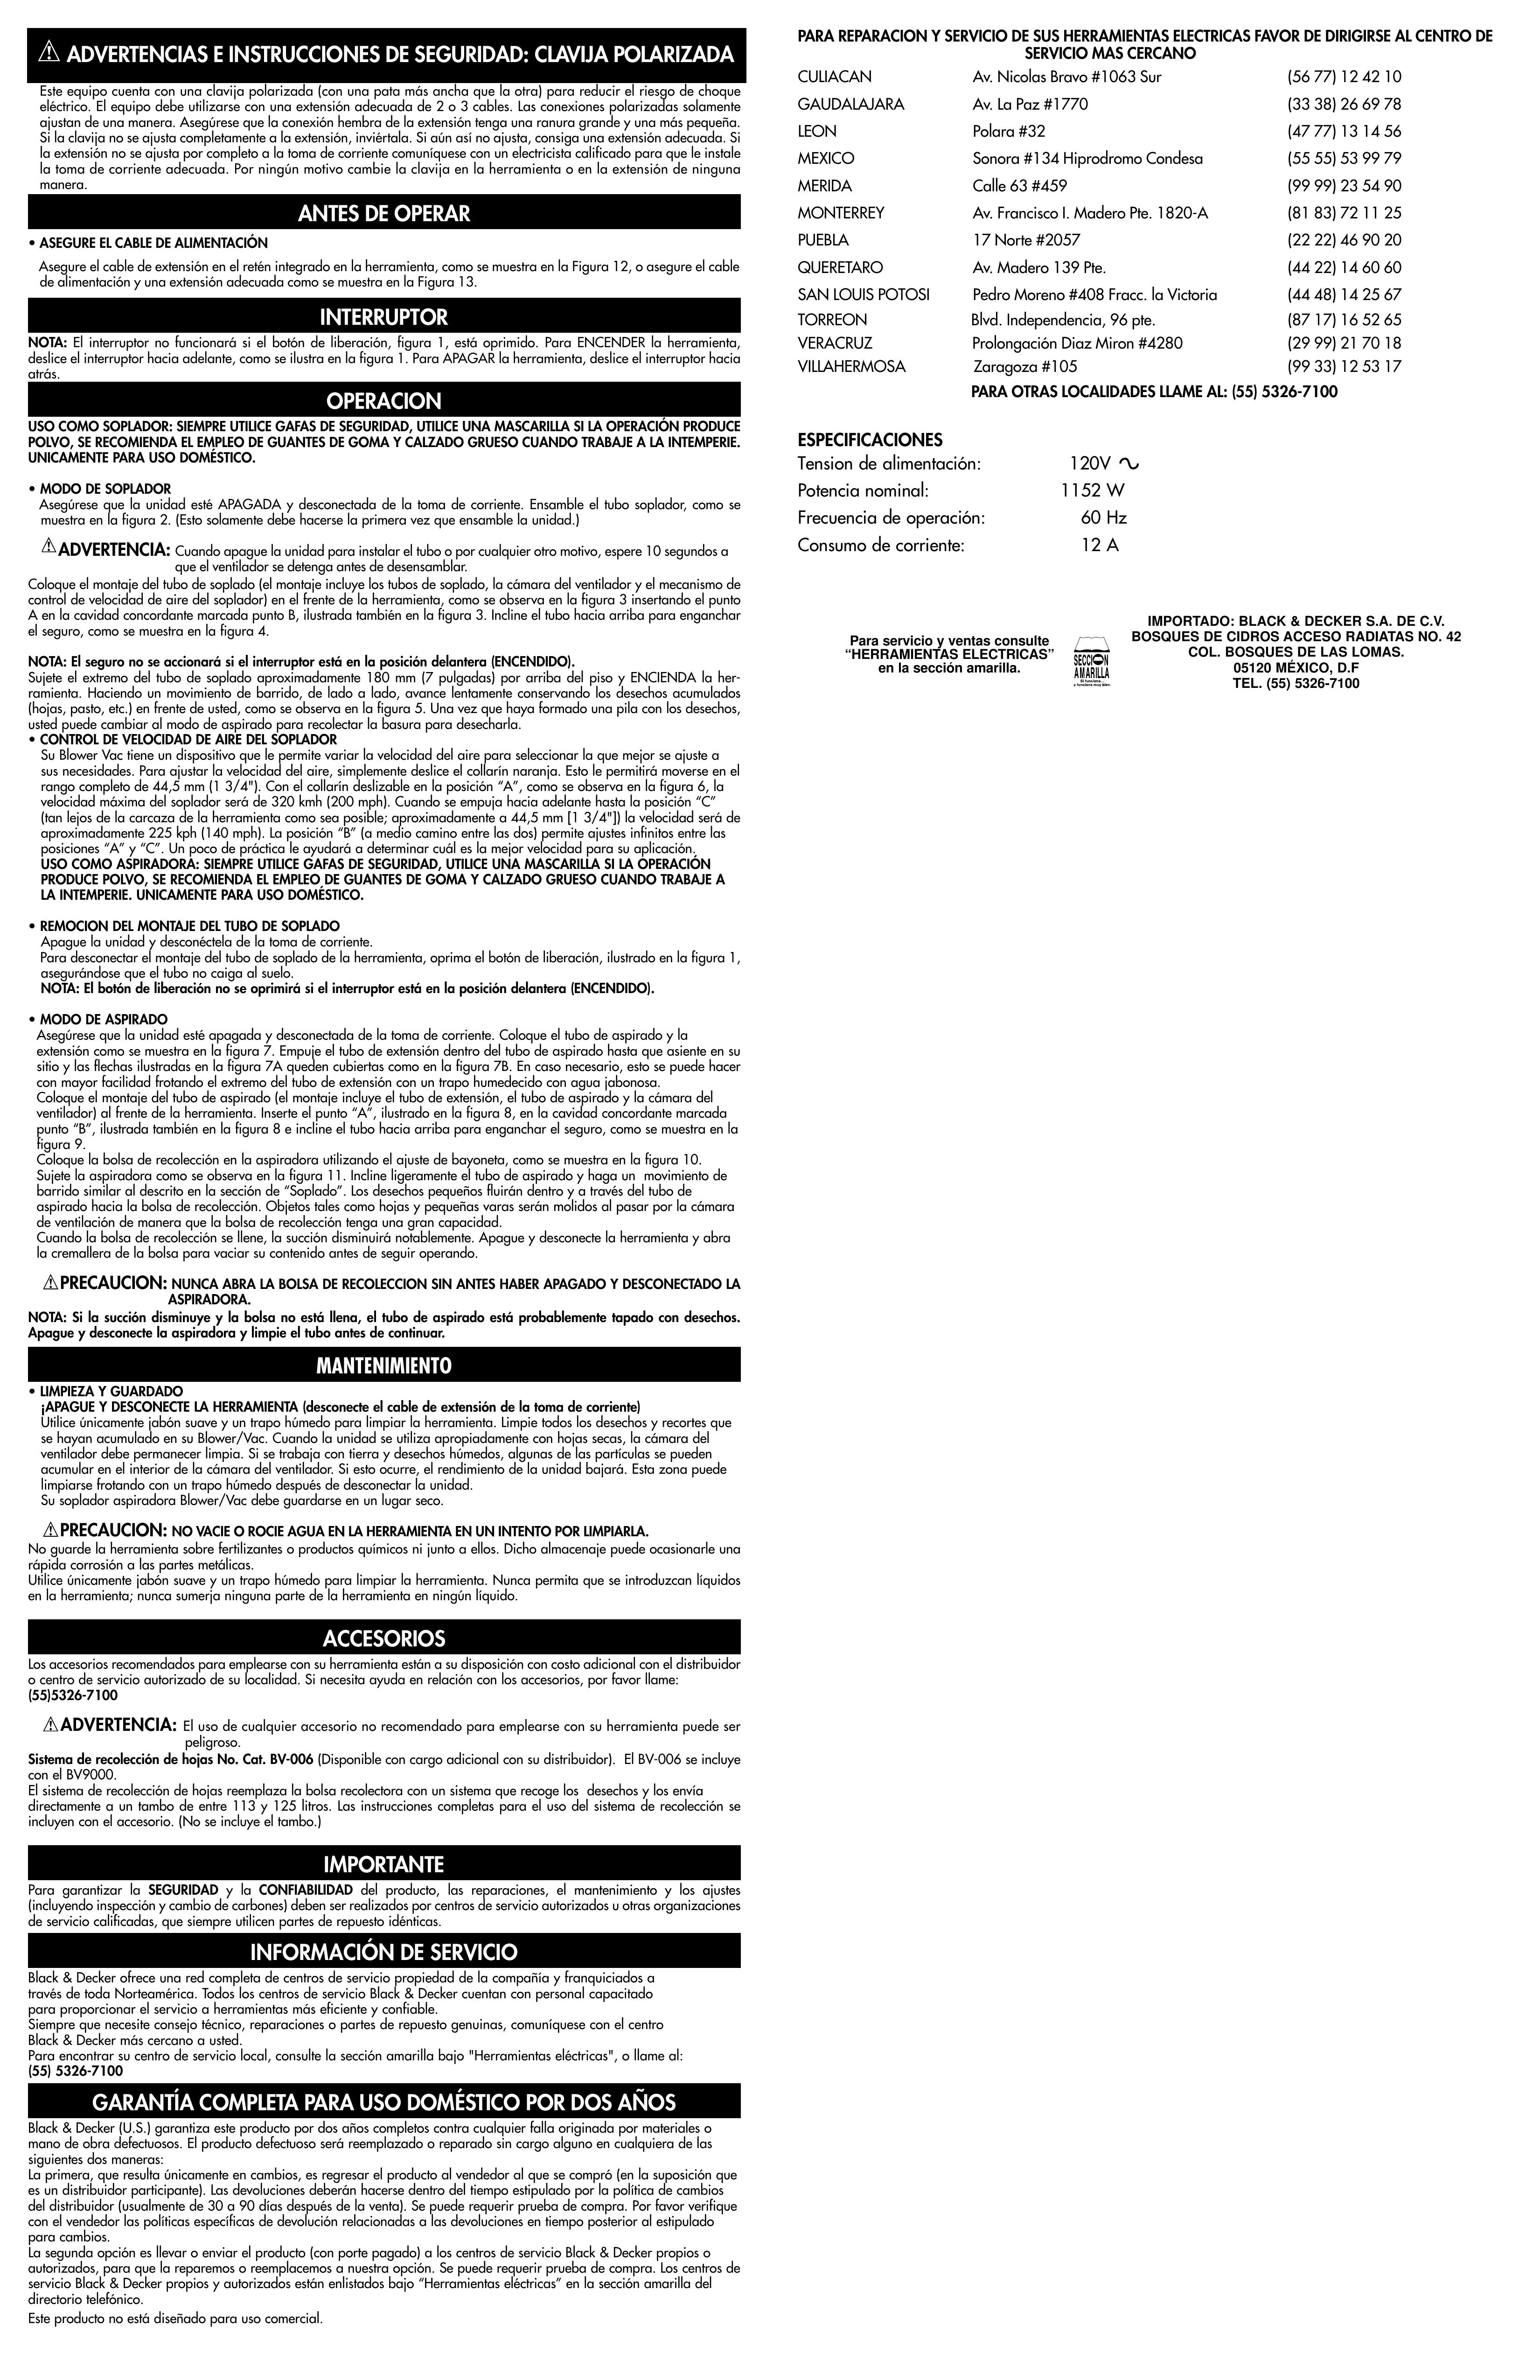 Black & Decker 608435-00 Blower User Manual (Page 4)